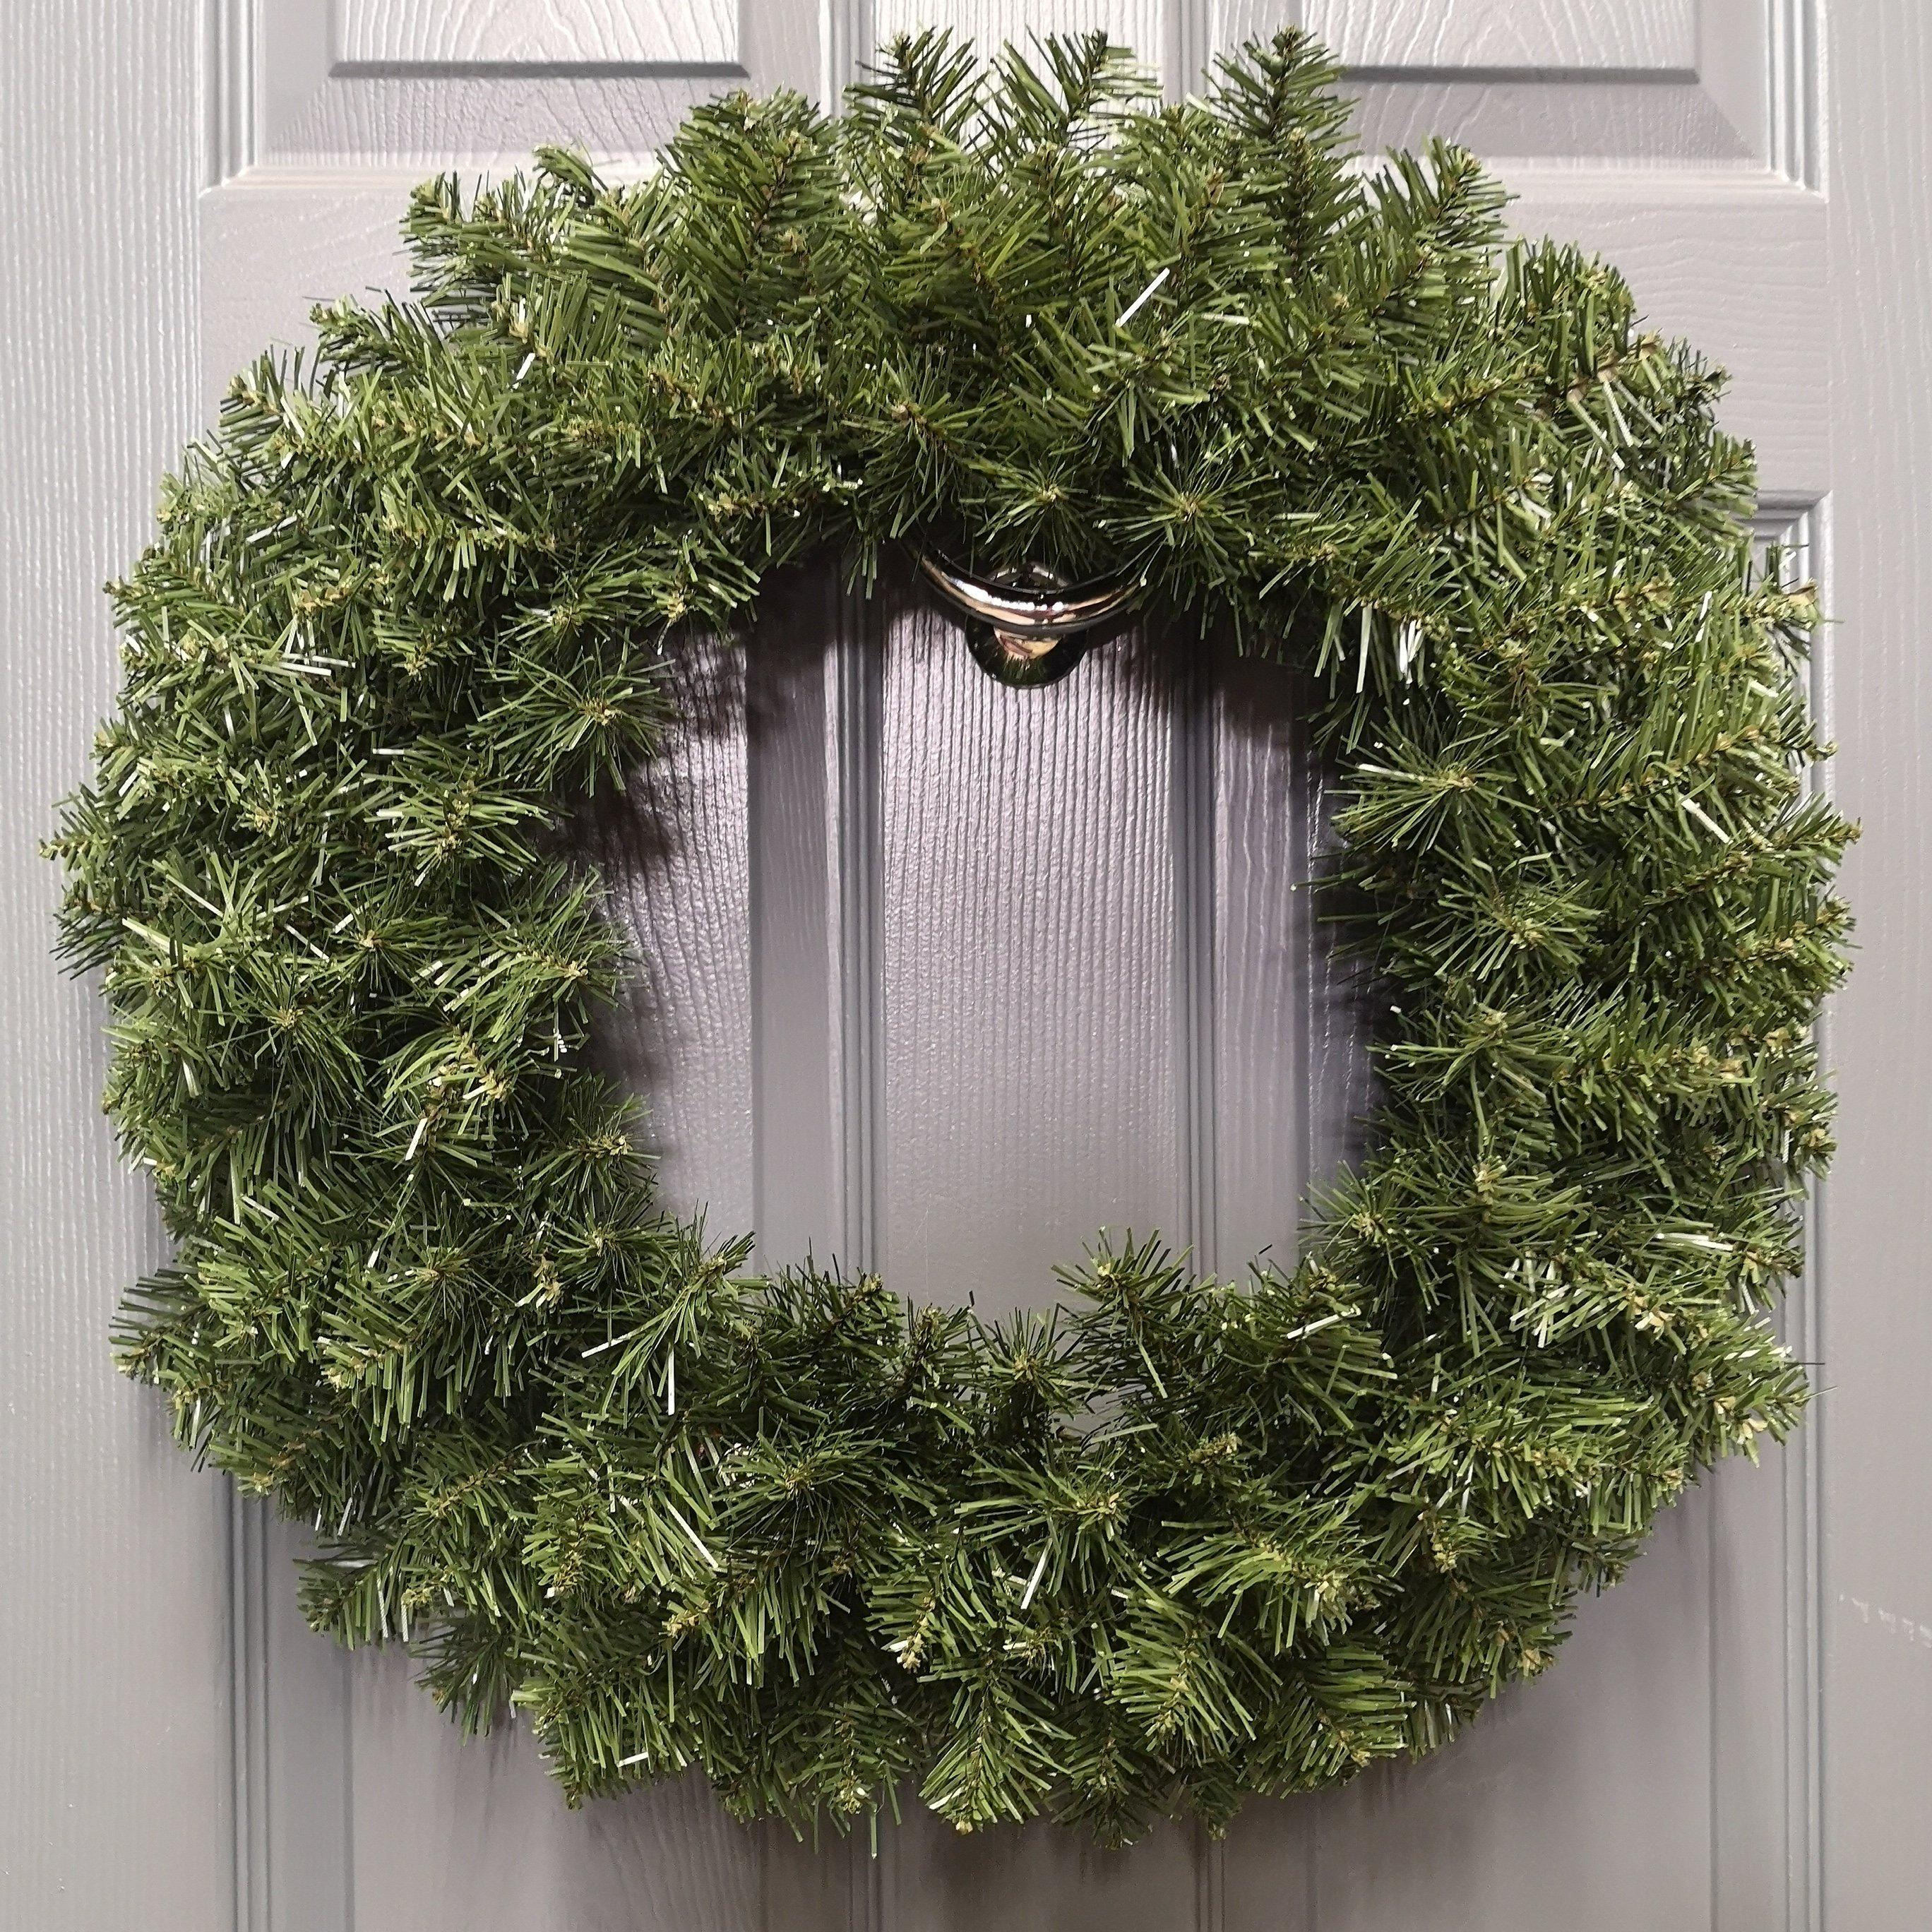 60cm Imperial Pine Christmas Door Wreath in Plain Green - image 1